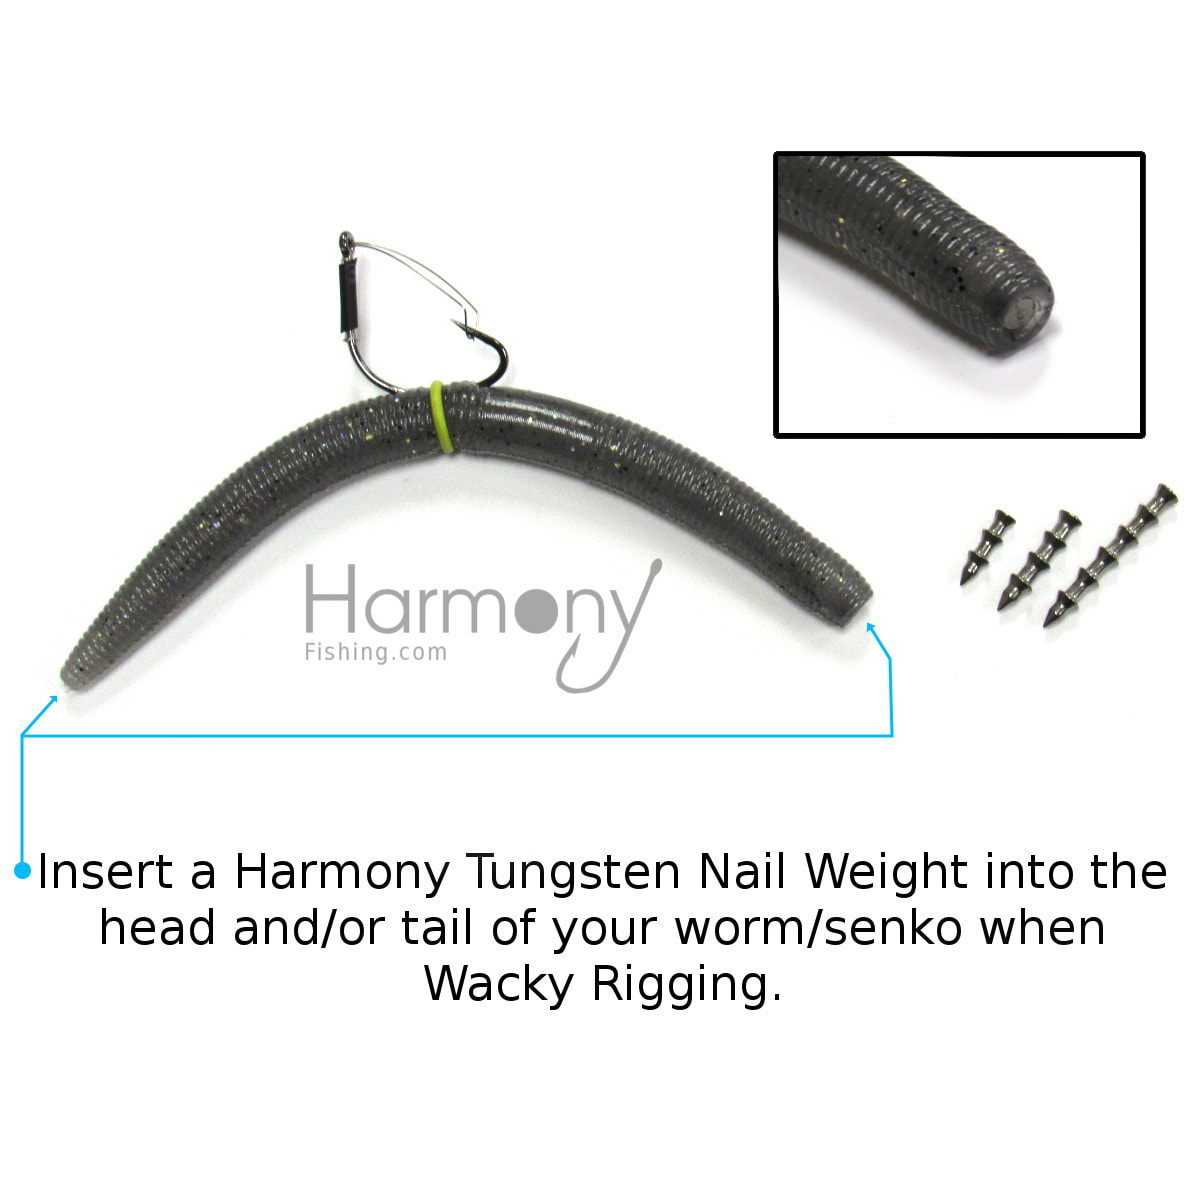 Nail Weights by Harmony Fishing Company